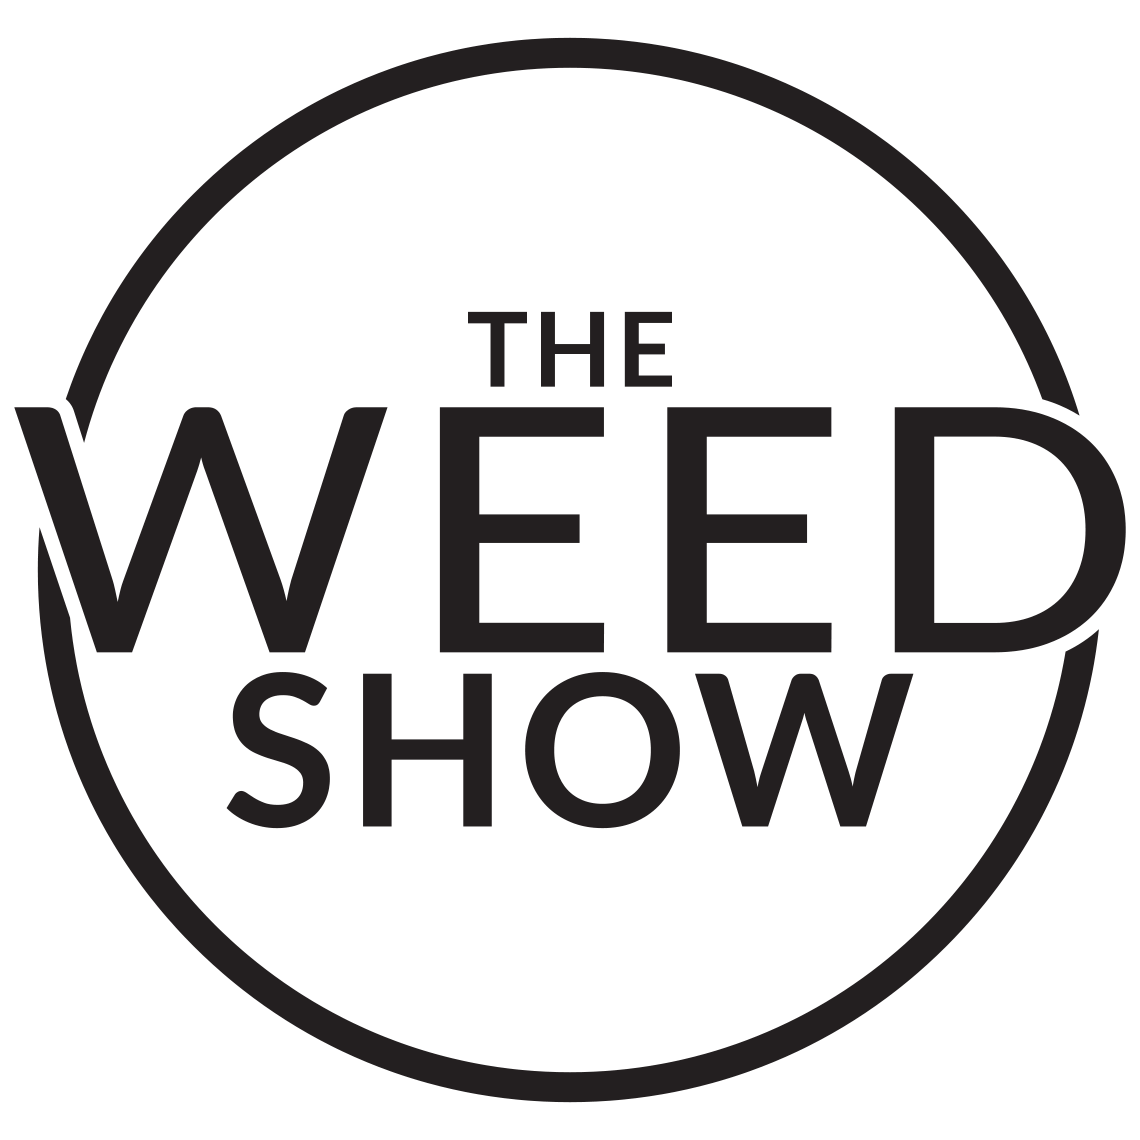 All Business Show Logo - the-weed-show-logo - Clark Neubert LLP | Cannabis Business Attorneys ...